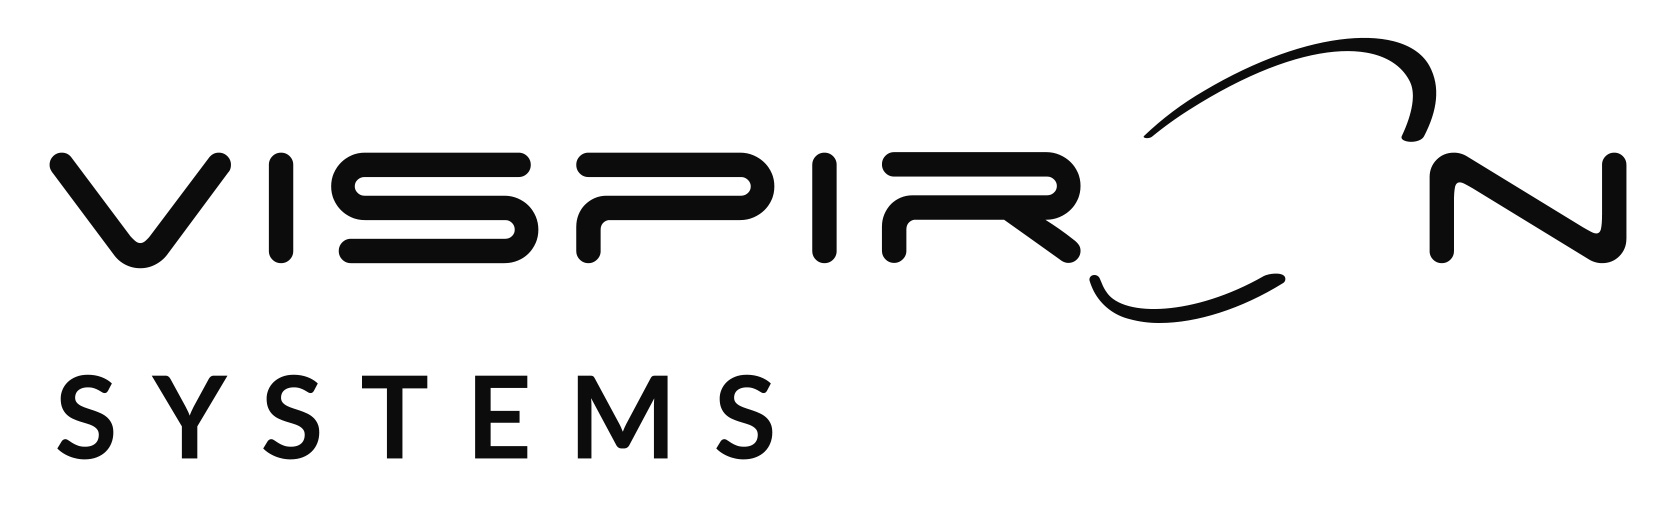 VISPIRON SYSTEMS GmbH